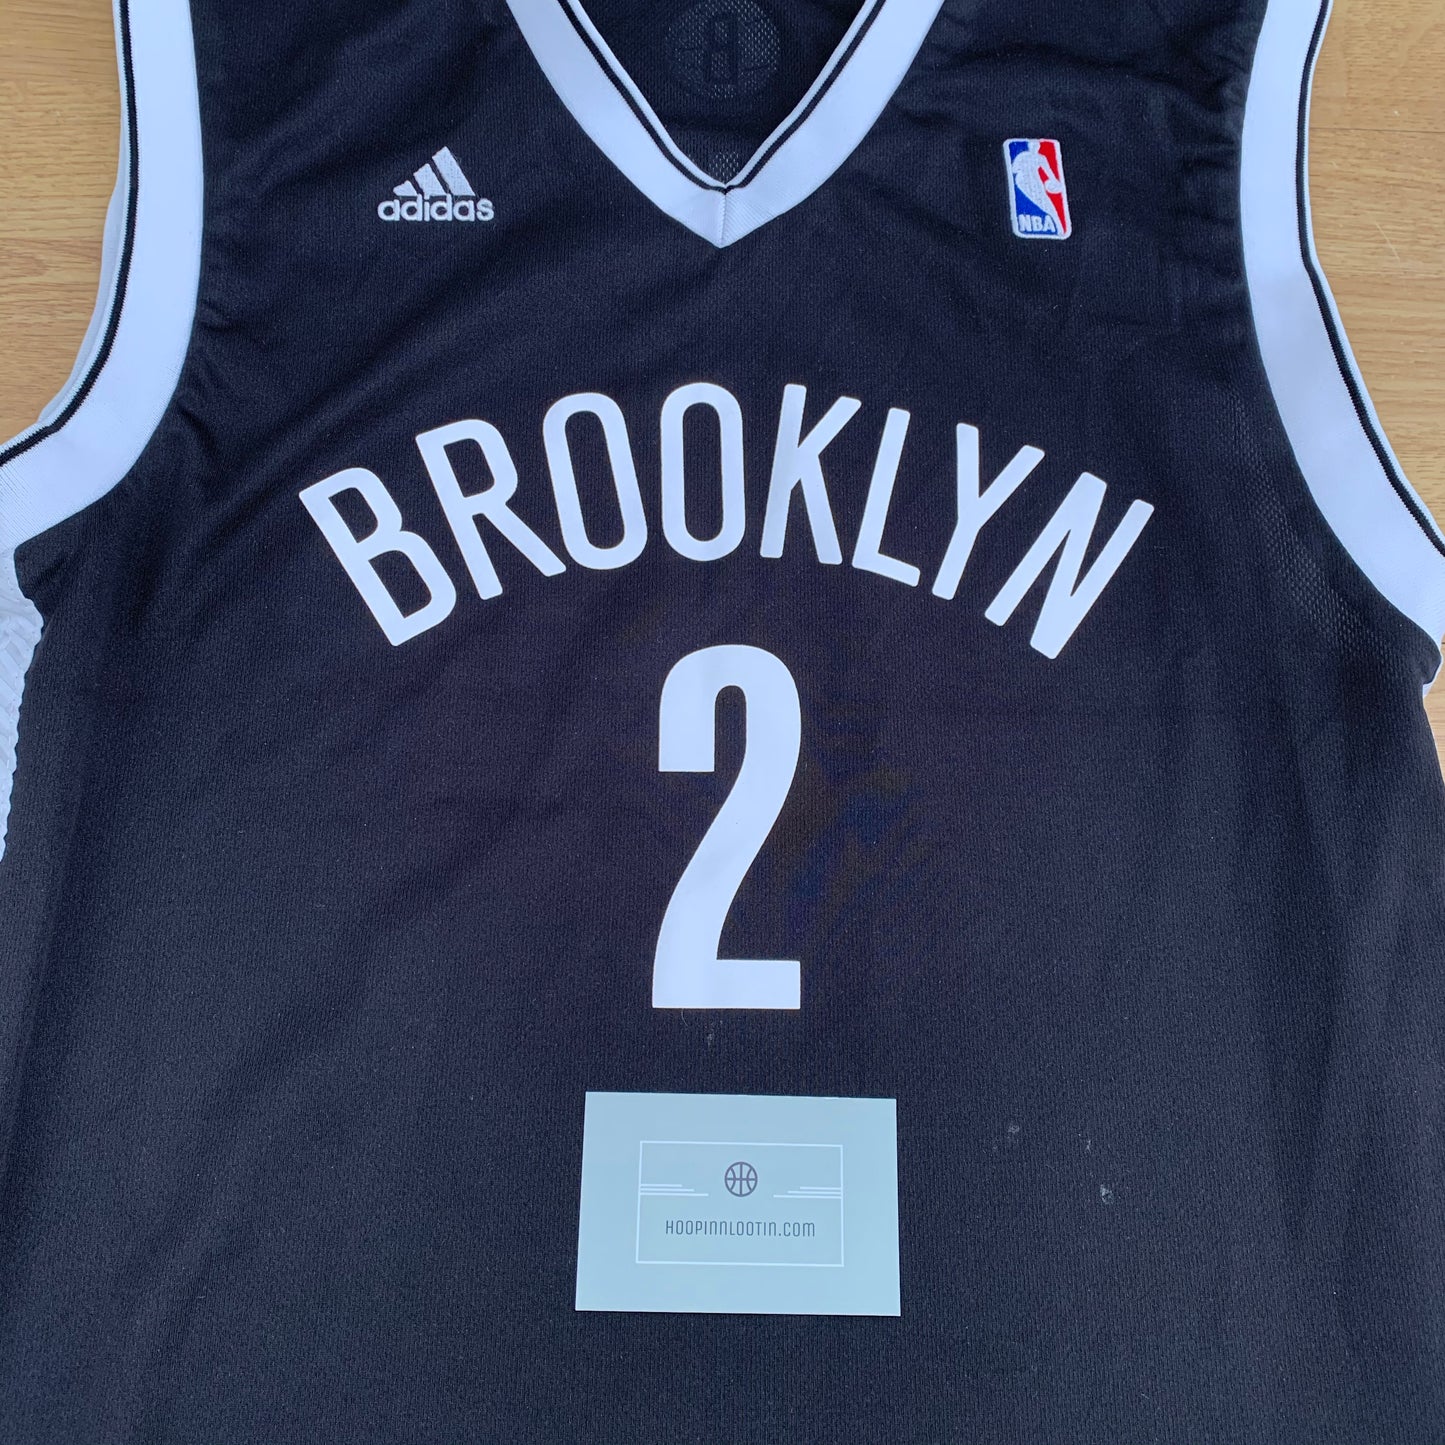 Kevin Garnett Brooklyn Nets Adidas Jersey